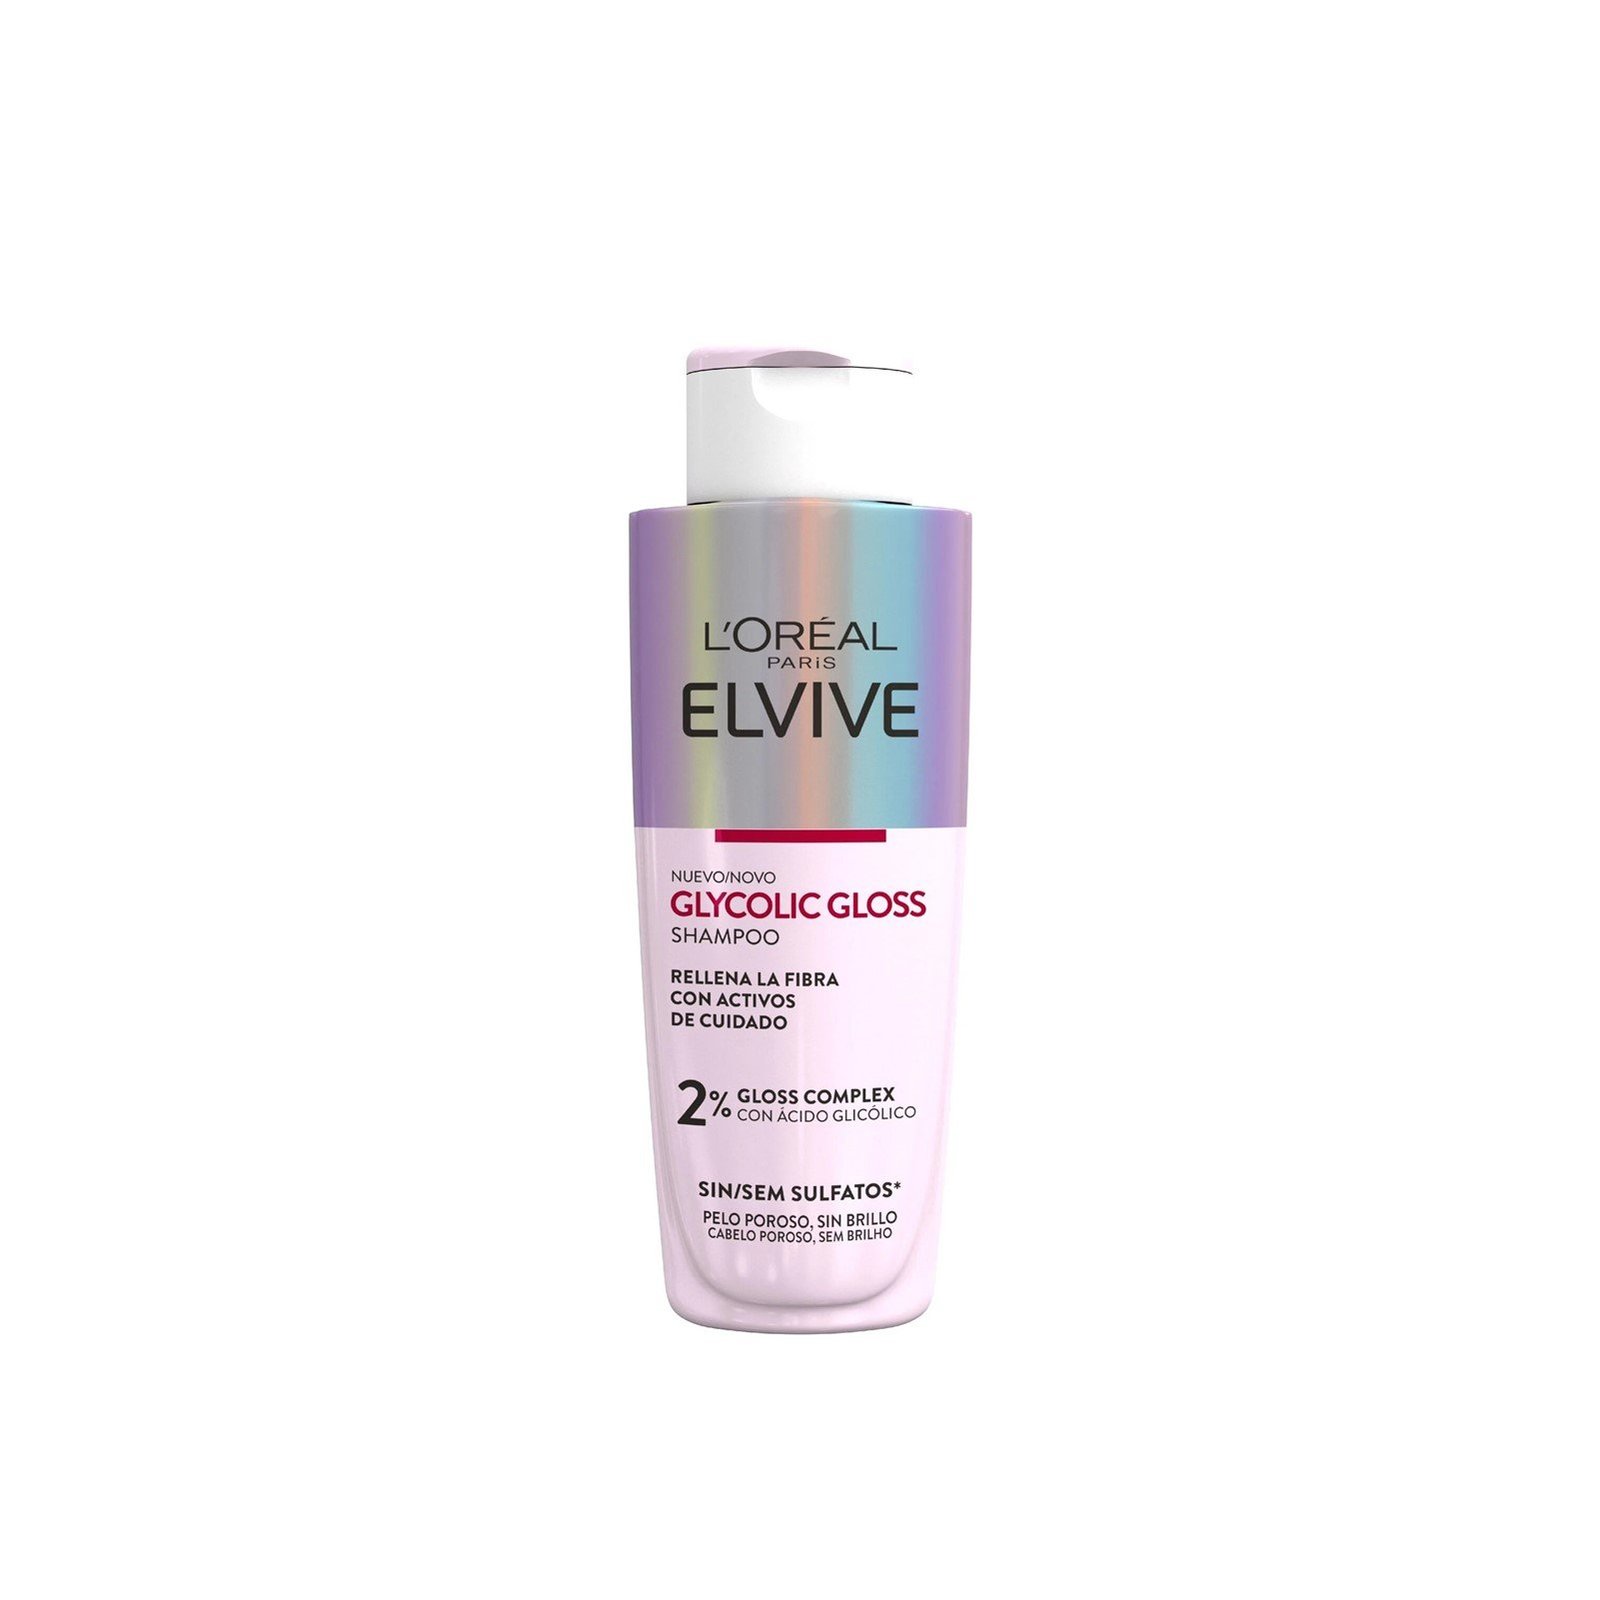 L'Oréal Paris Elvive Glycolic Gloss Shampoo 200ml (6.76 fl oz)